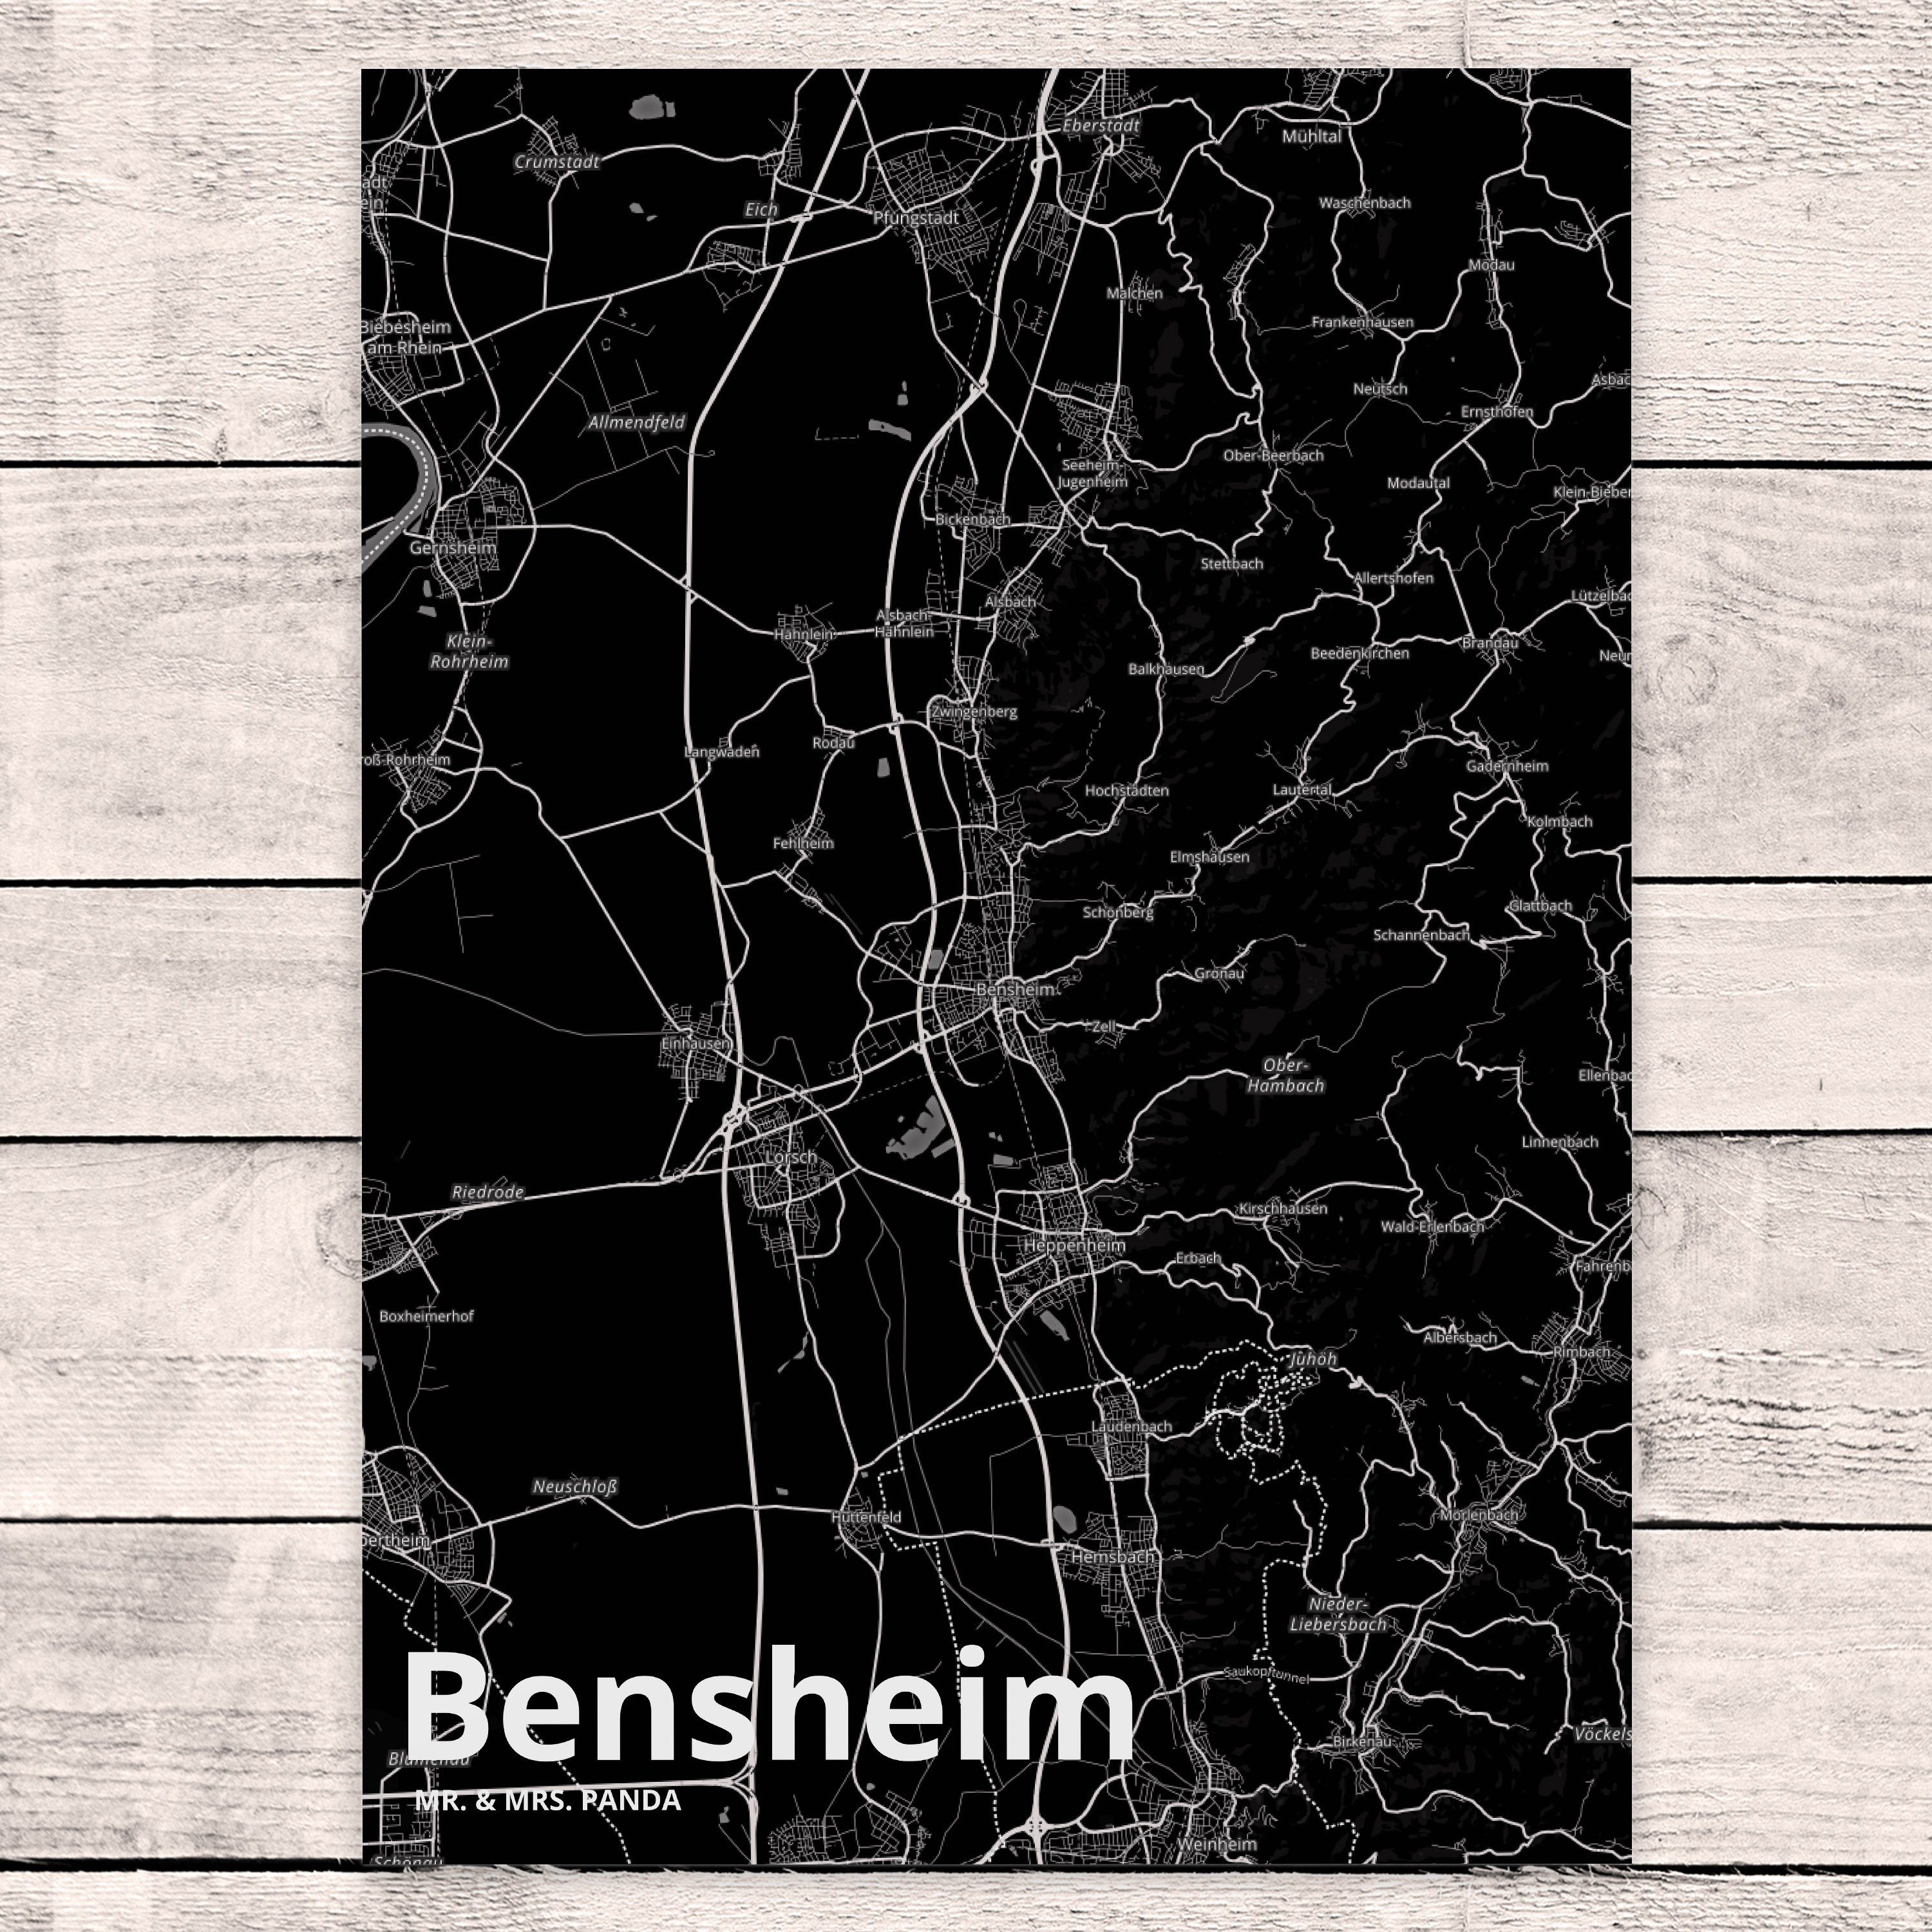 Geschenk, Grußkarte, Postkarte Landkarte Mrs. - Map Bensheim Stadt Stadtp Panda Mr. & Dorf Karte